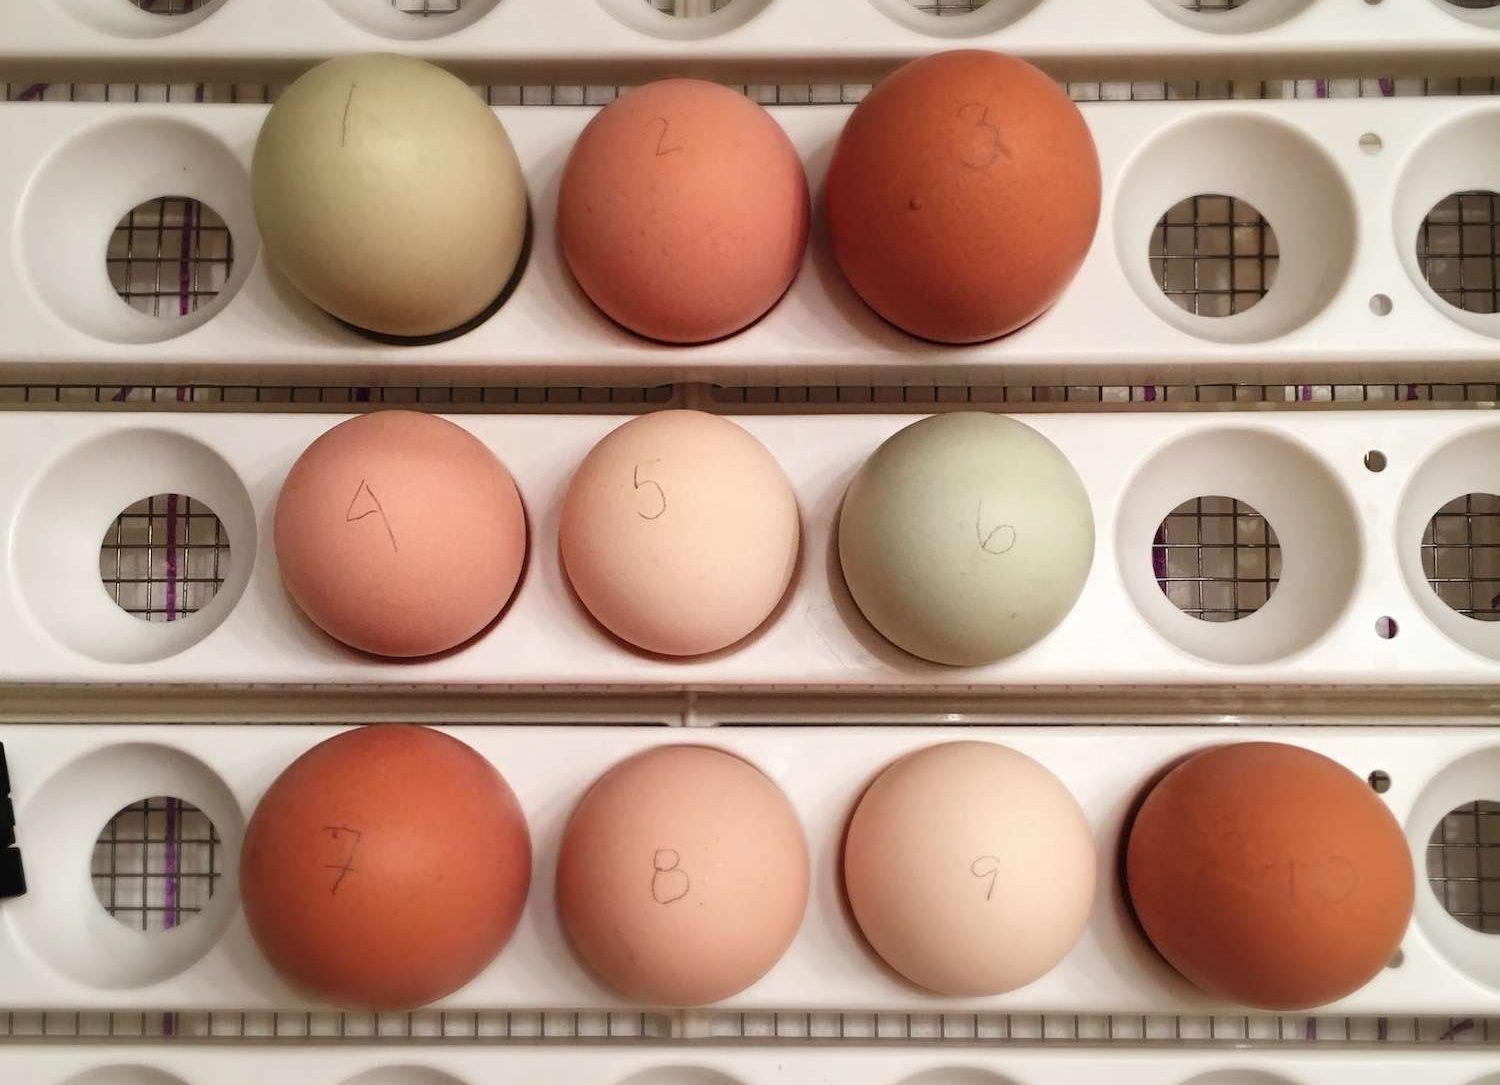 10 eggs in an incubator set in the egg turner